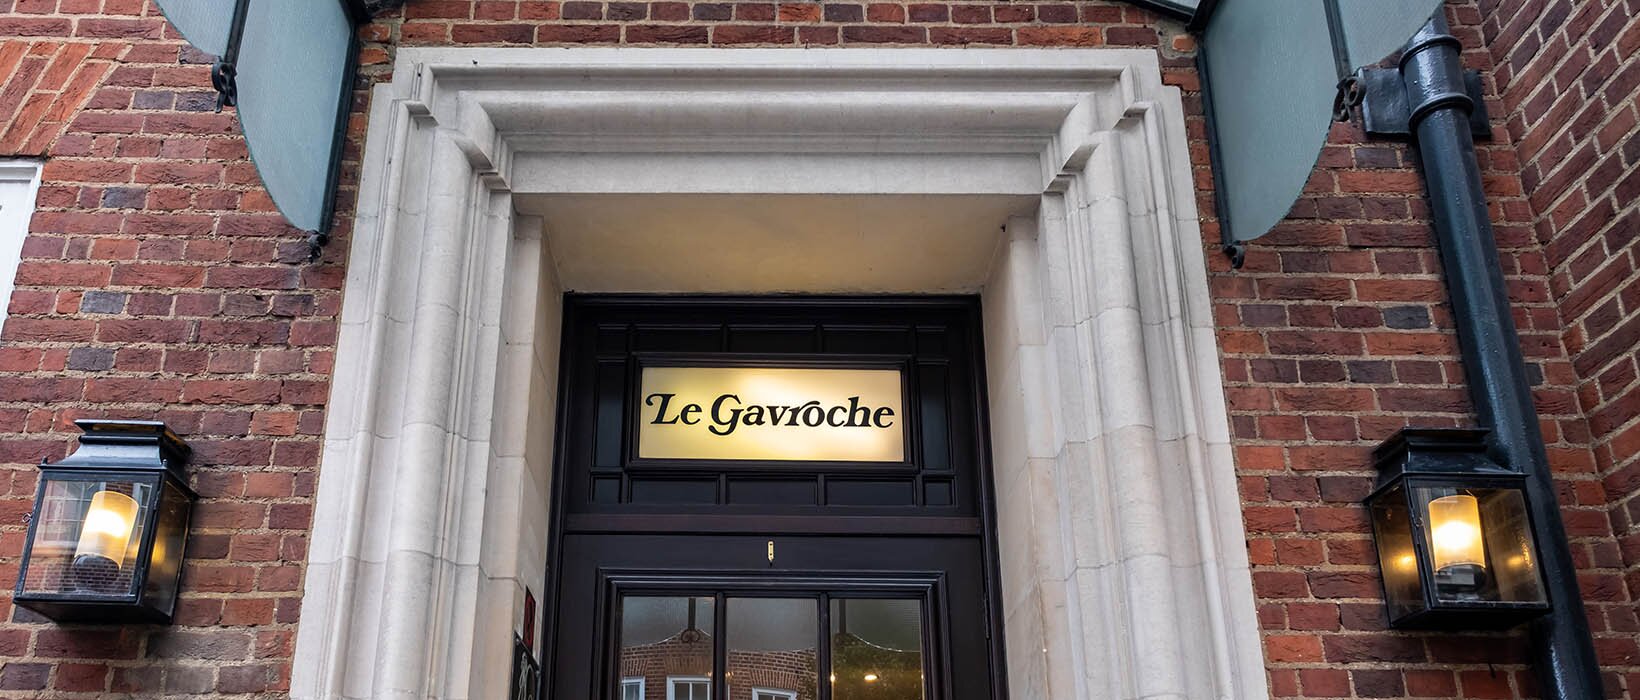 High-profile chefs and international names eye Le Gavroche site